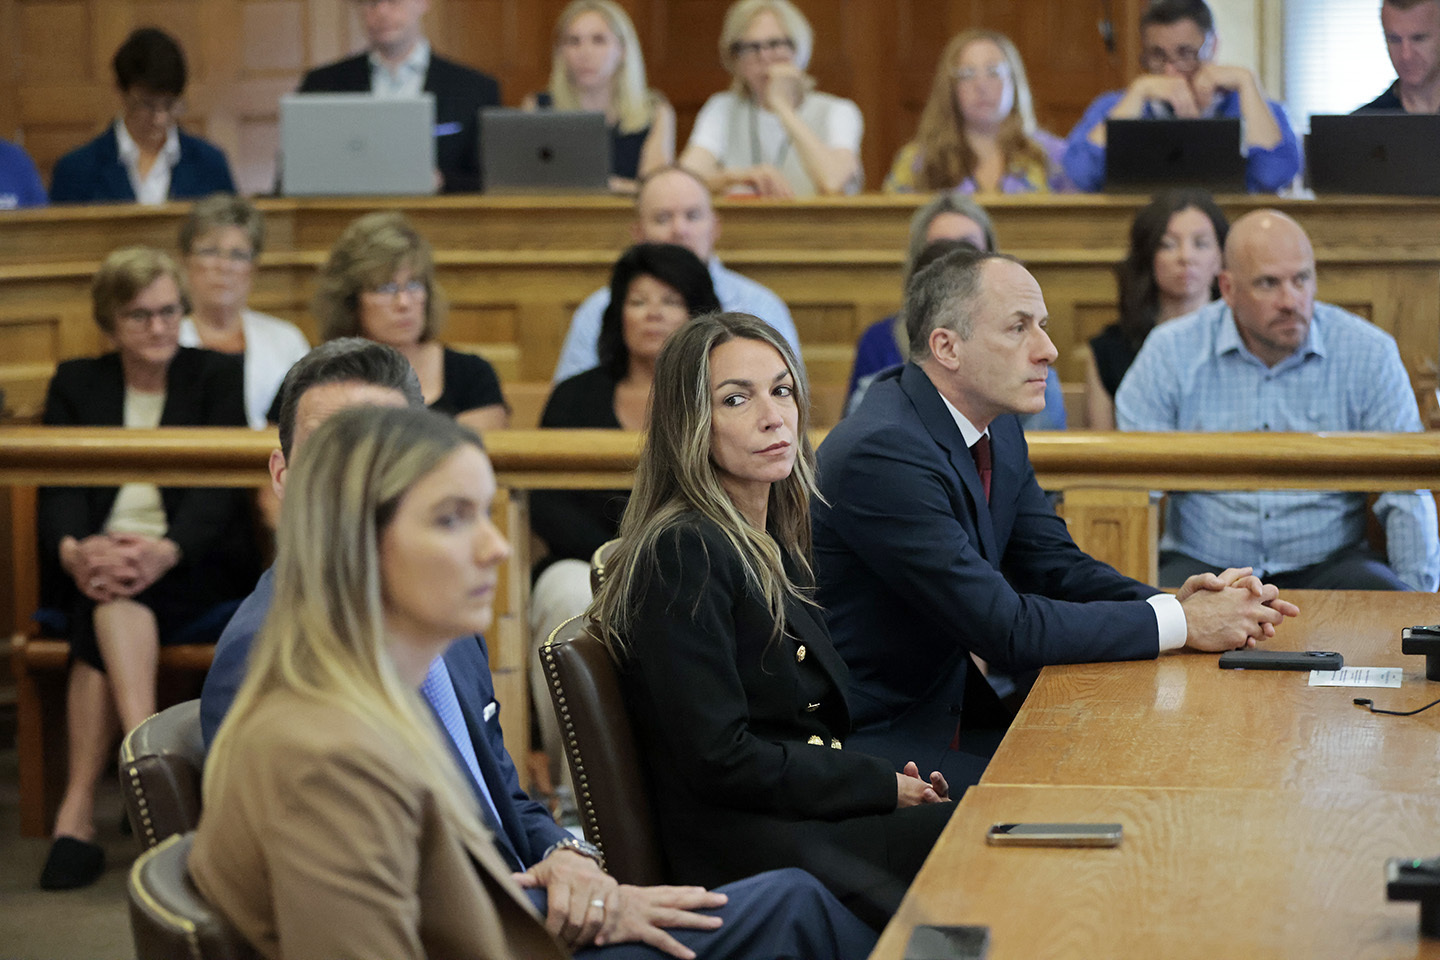 Karen Read Verdict Watch: Jury Can't Reach Decision After 18 Hours